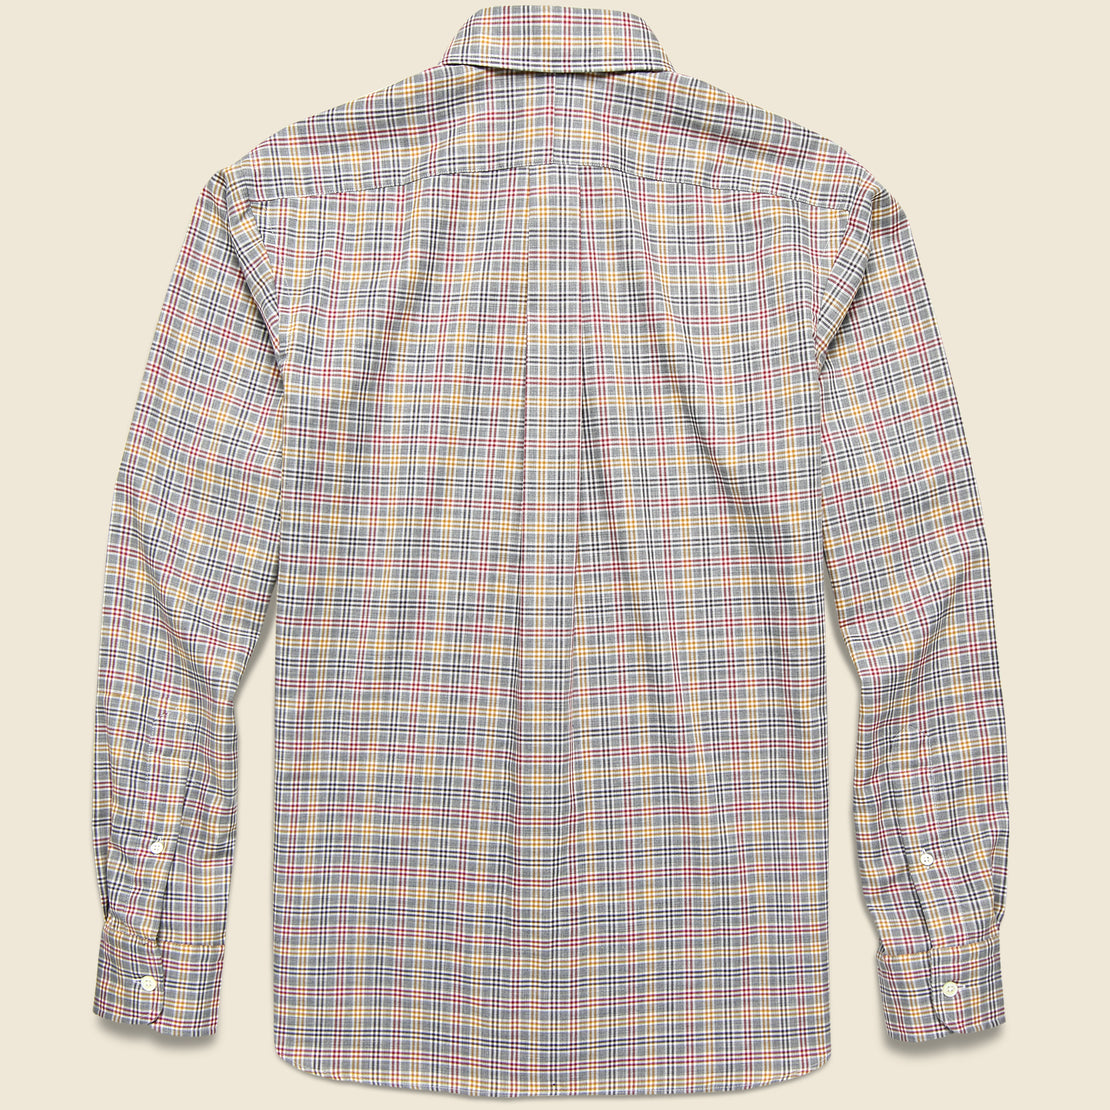 Small Check Plaid Melange Shirt - Grey/Gold/Brick - Hamilton Shirt Co. - STAG Provisions - Tops - L/S Woven - Plaid